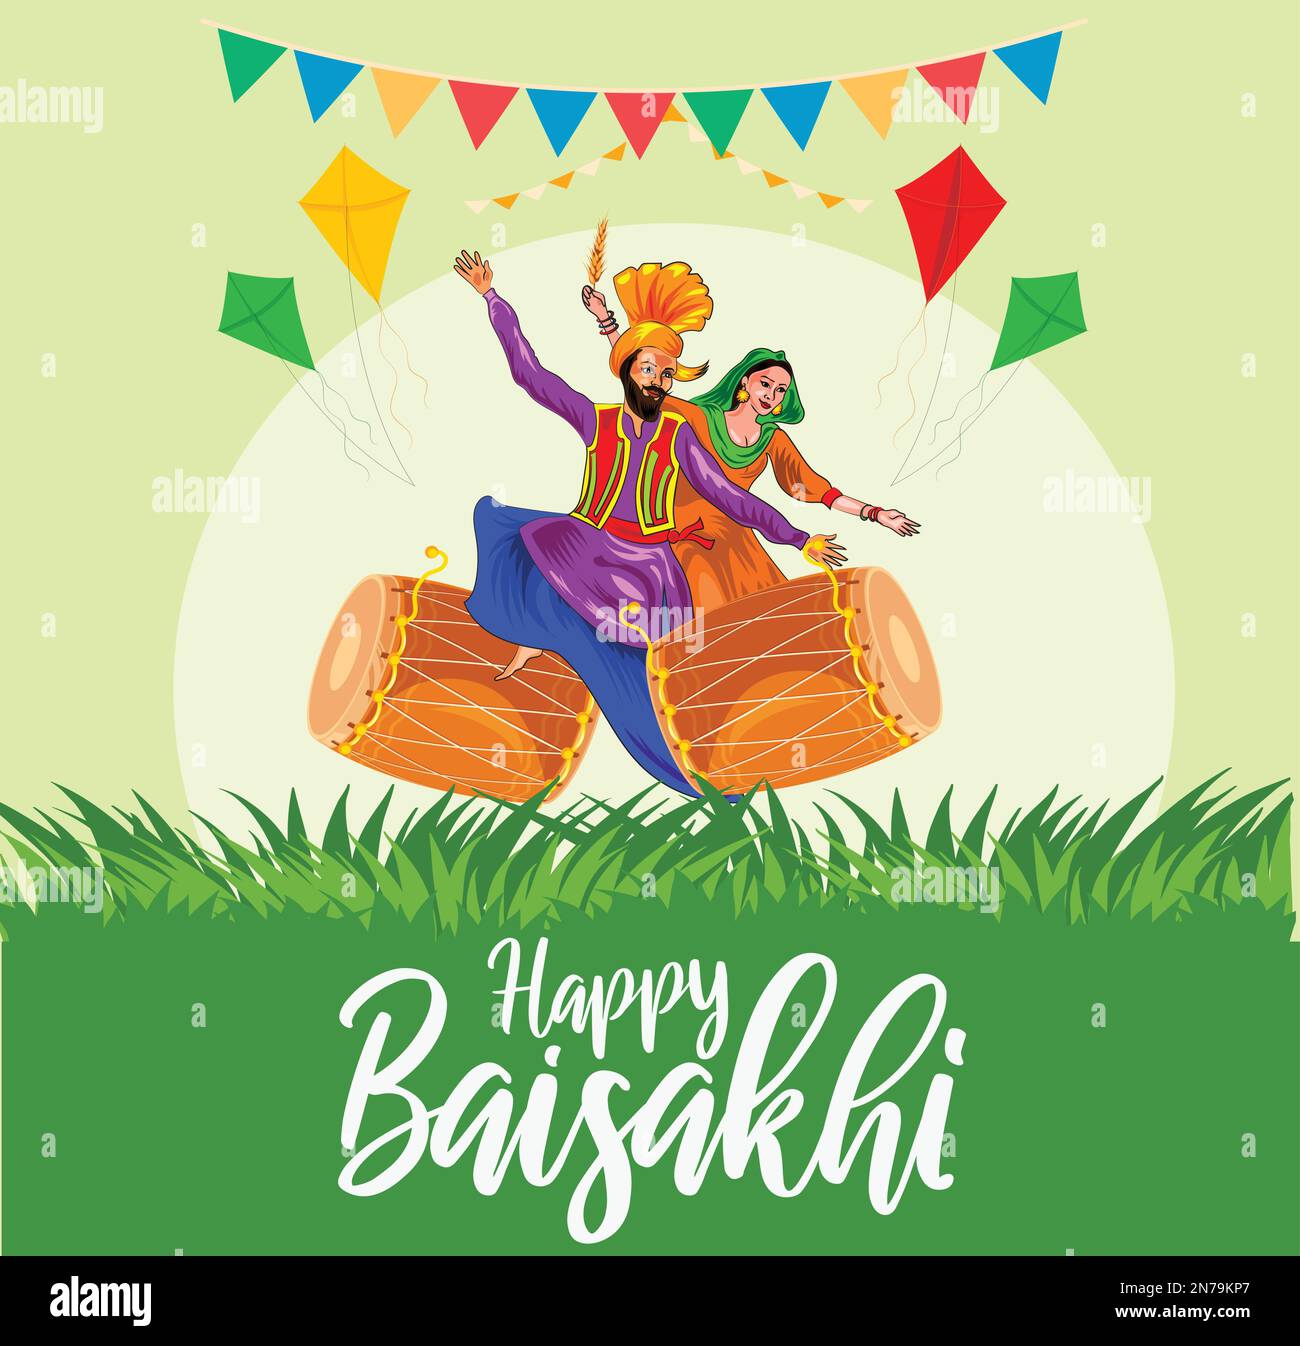 Happy baisakhi vector illustration Stock Vector Image & Art Alamy